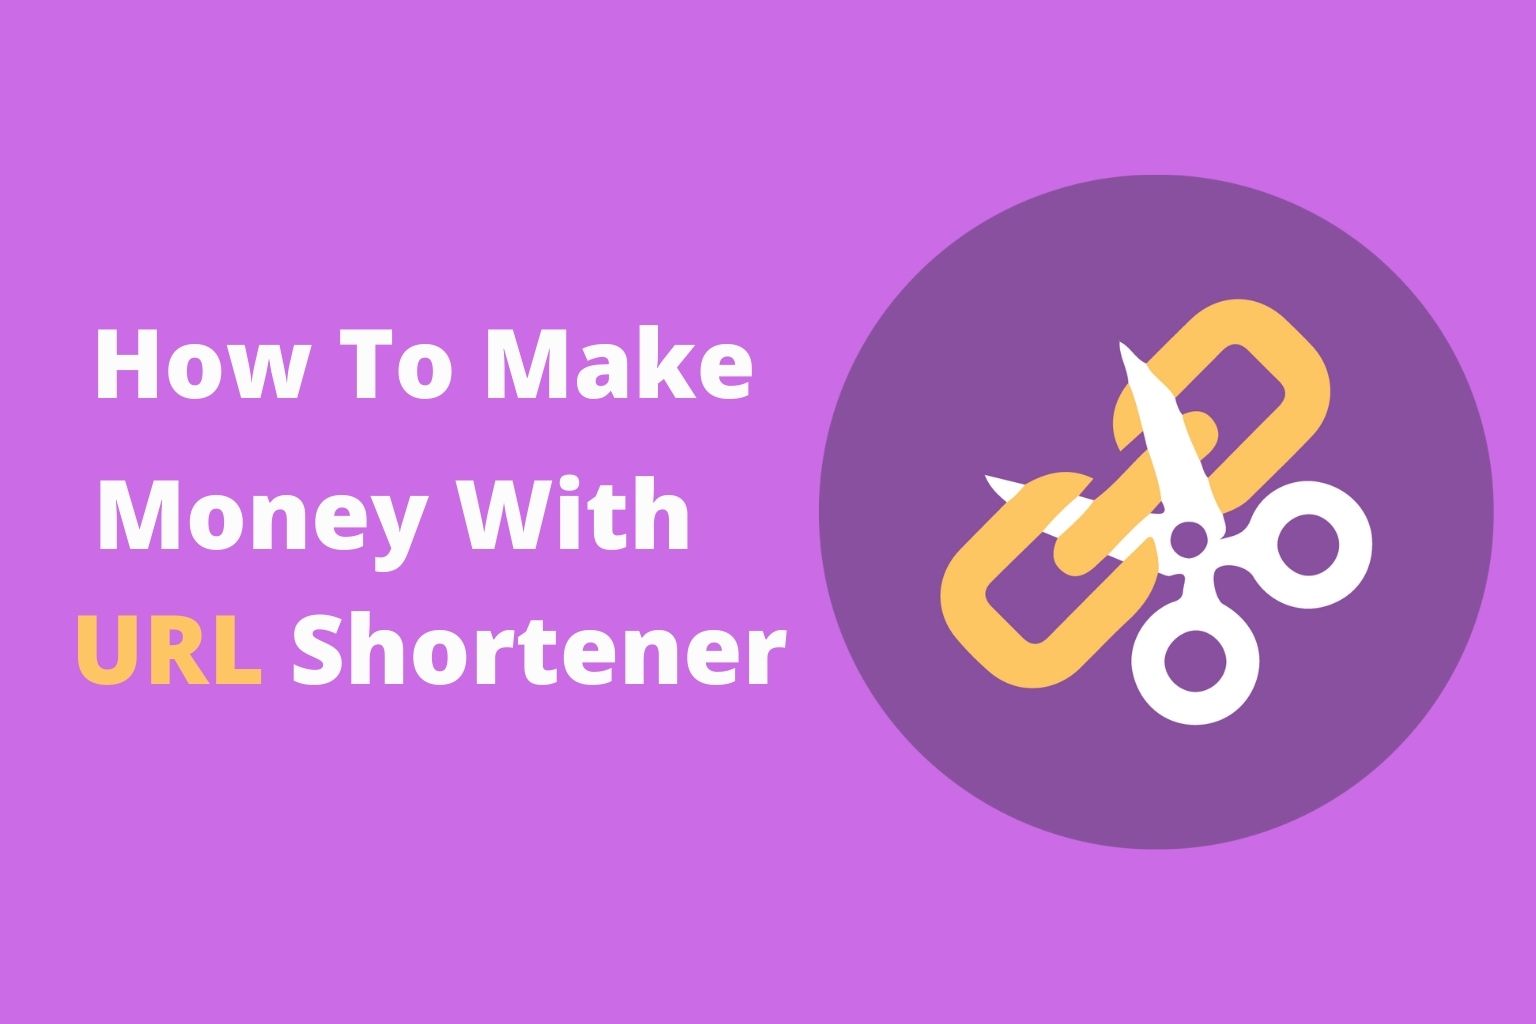 How to Make Money With URL Shortener